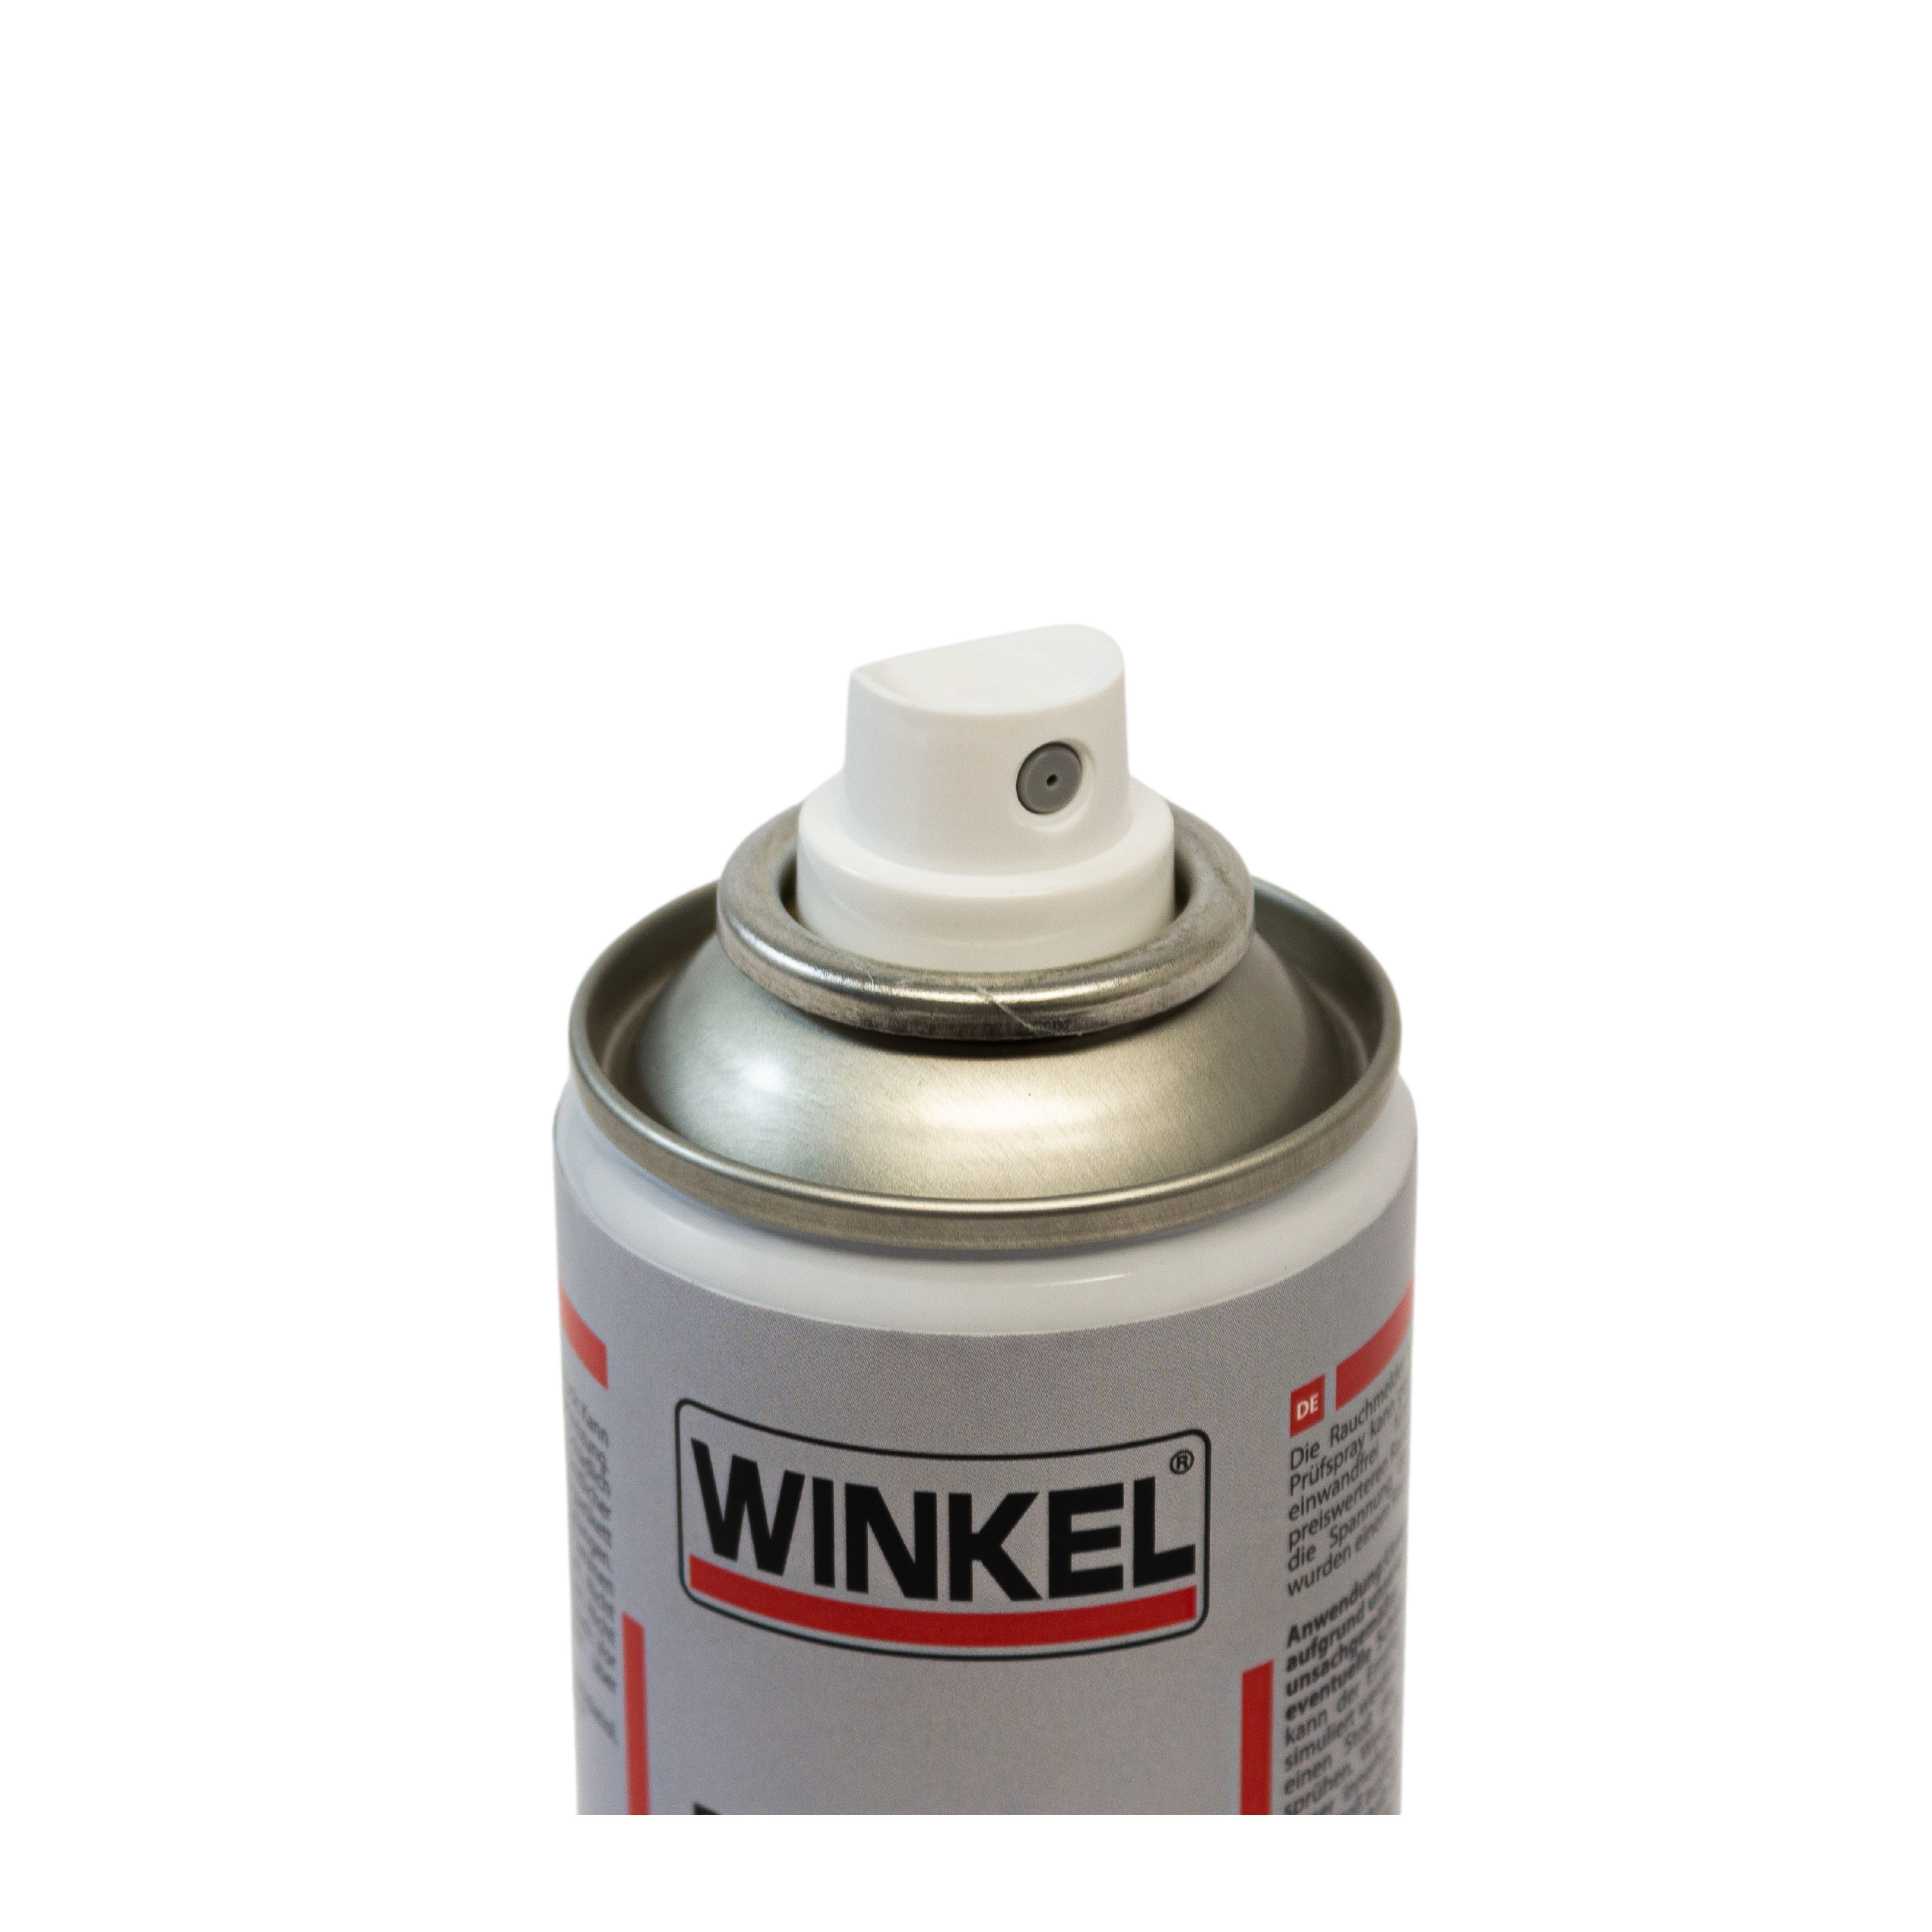 Winkel Smoke Detector Test Spray, 200 ml, IMPA 331077